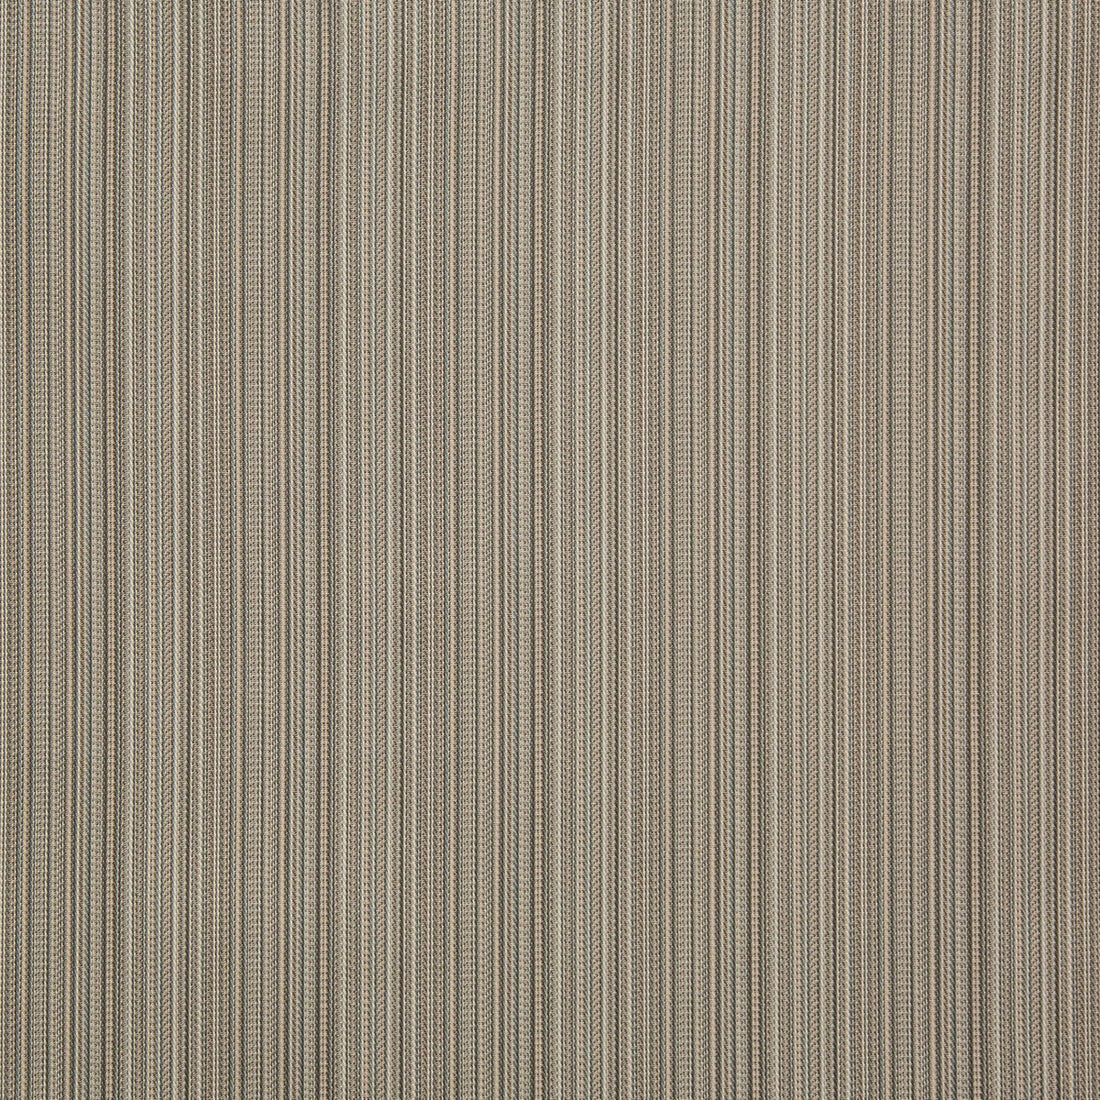 Kravet Smart fabric in 33395-1615 color - pattern 33395.1615.0 - by Kravet Smart in the Soleil collection